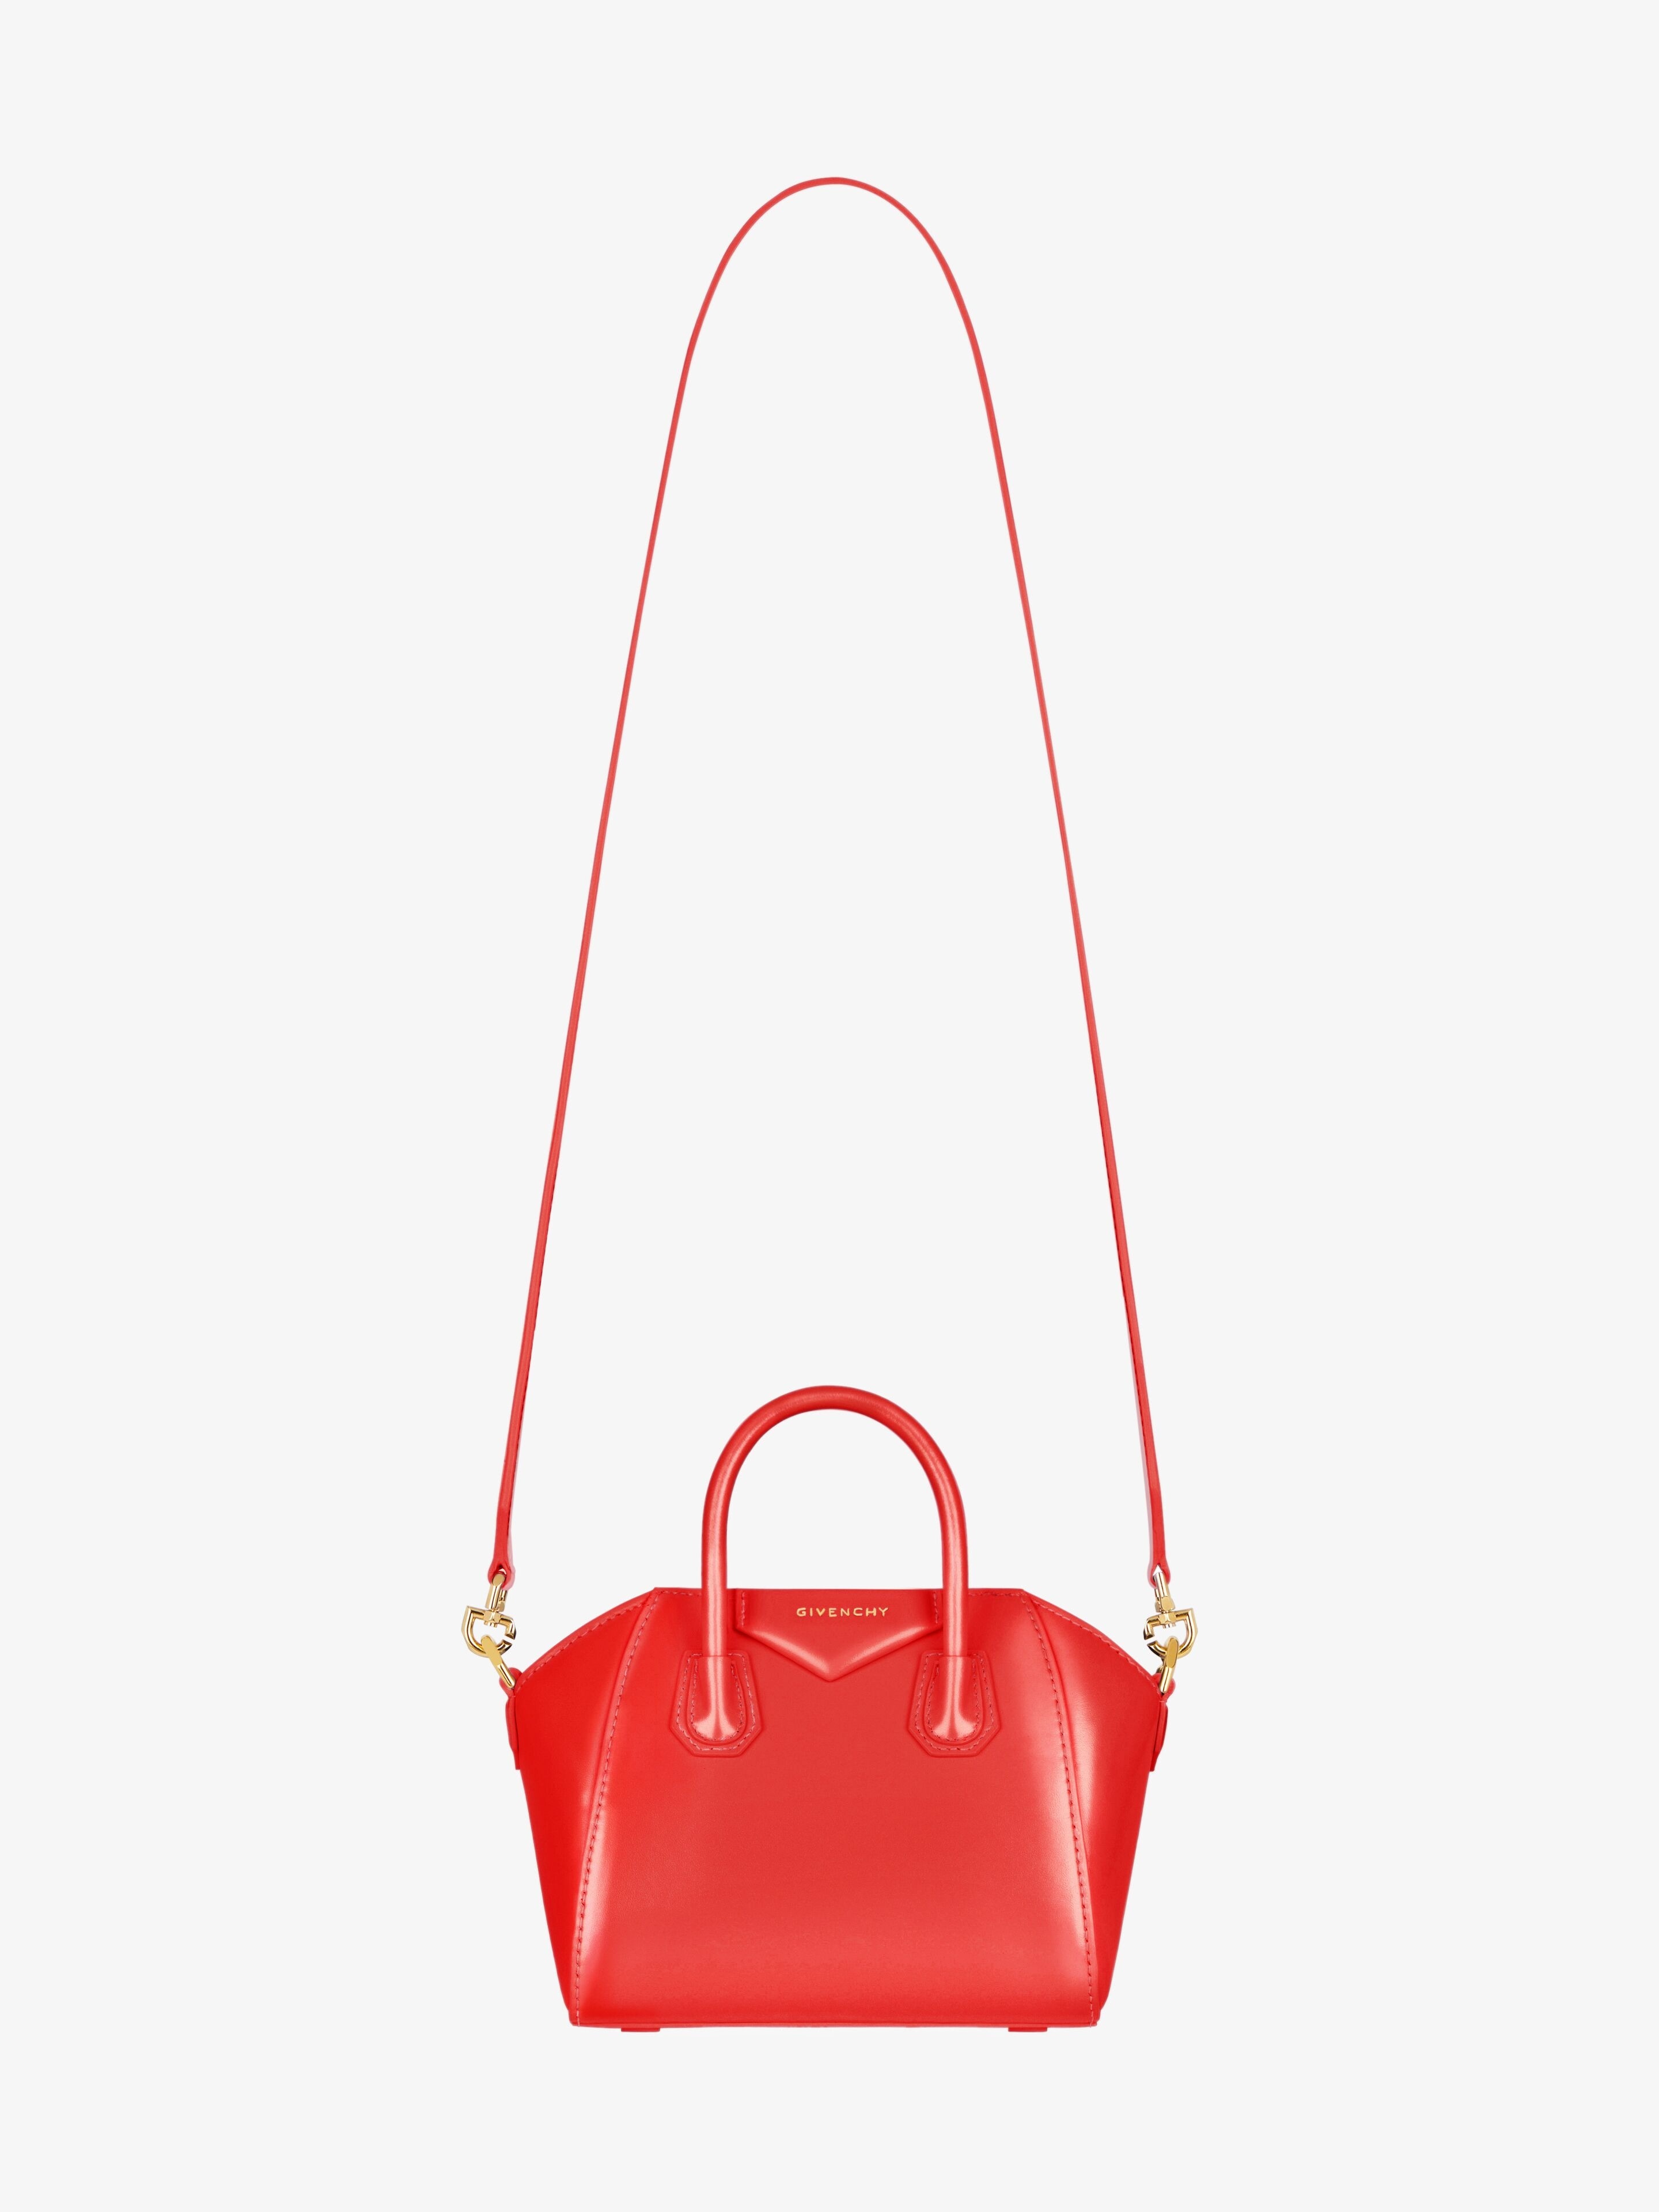 Givenchy Antigona Handbag 349716